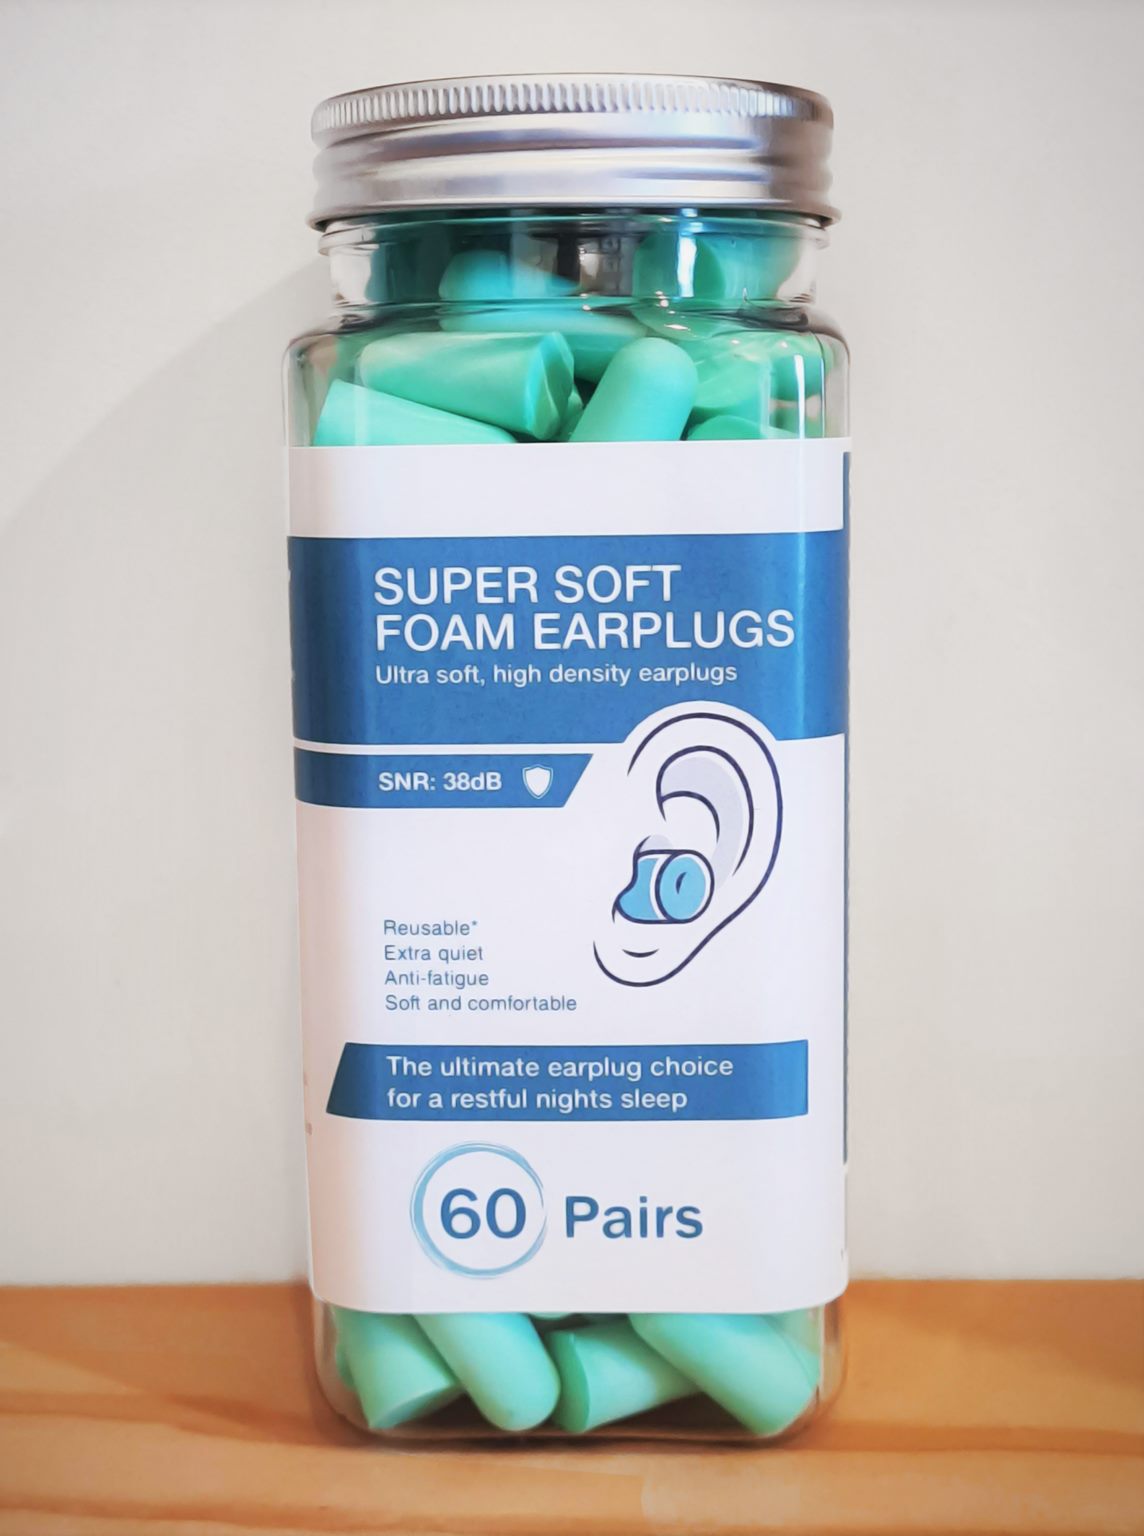 Super soft earplugs